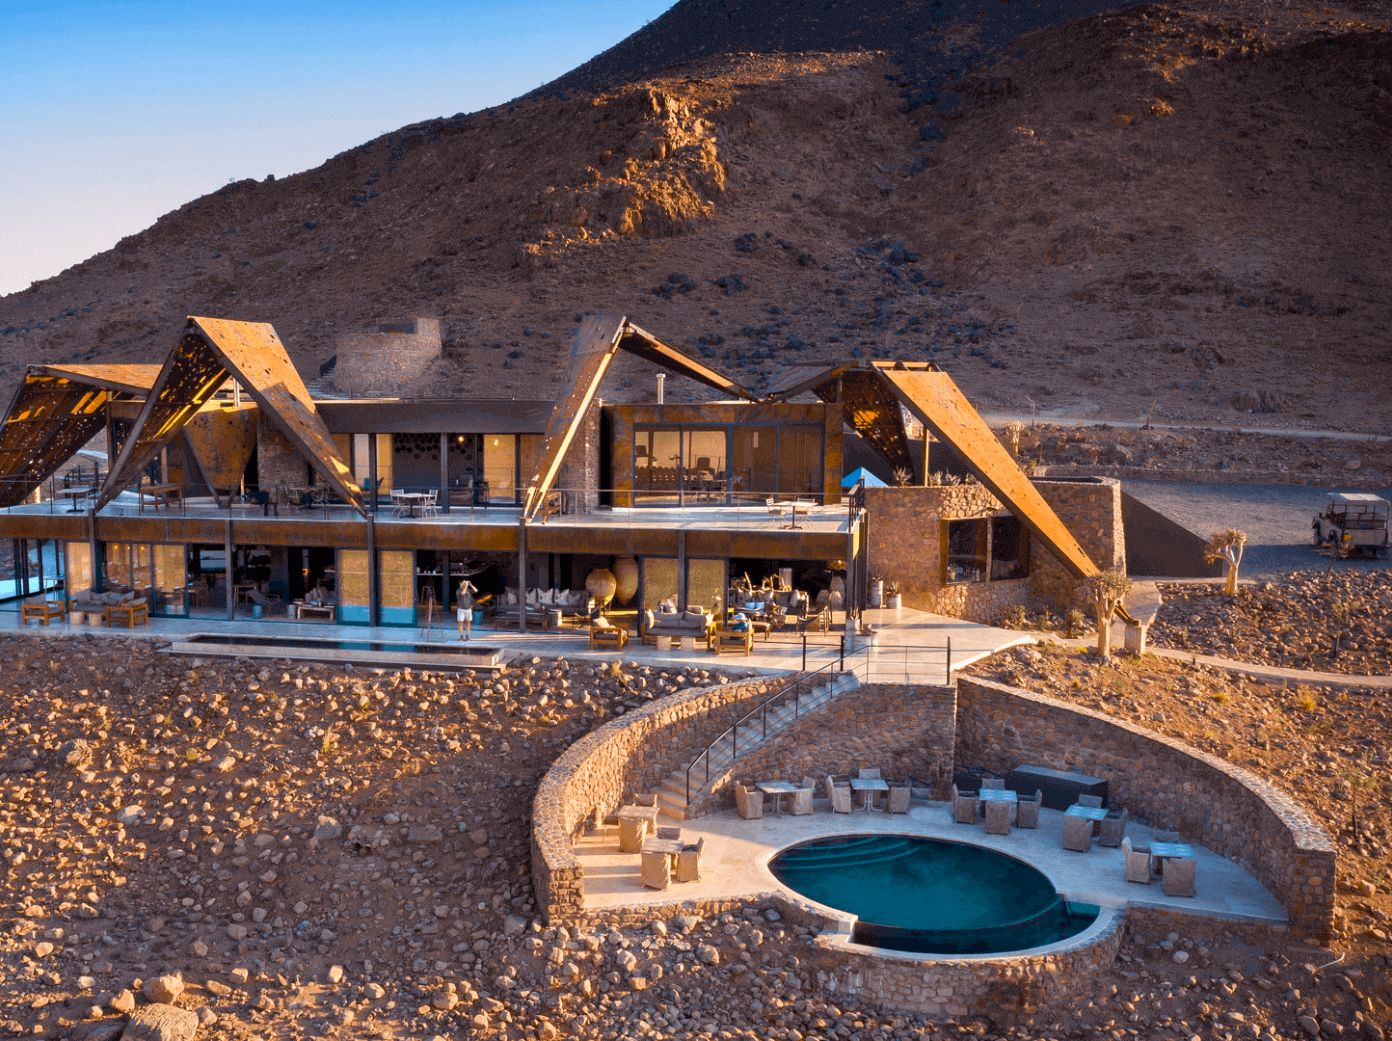 andBeyondSossusvlei Desert Lodge